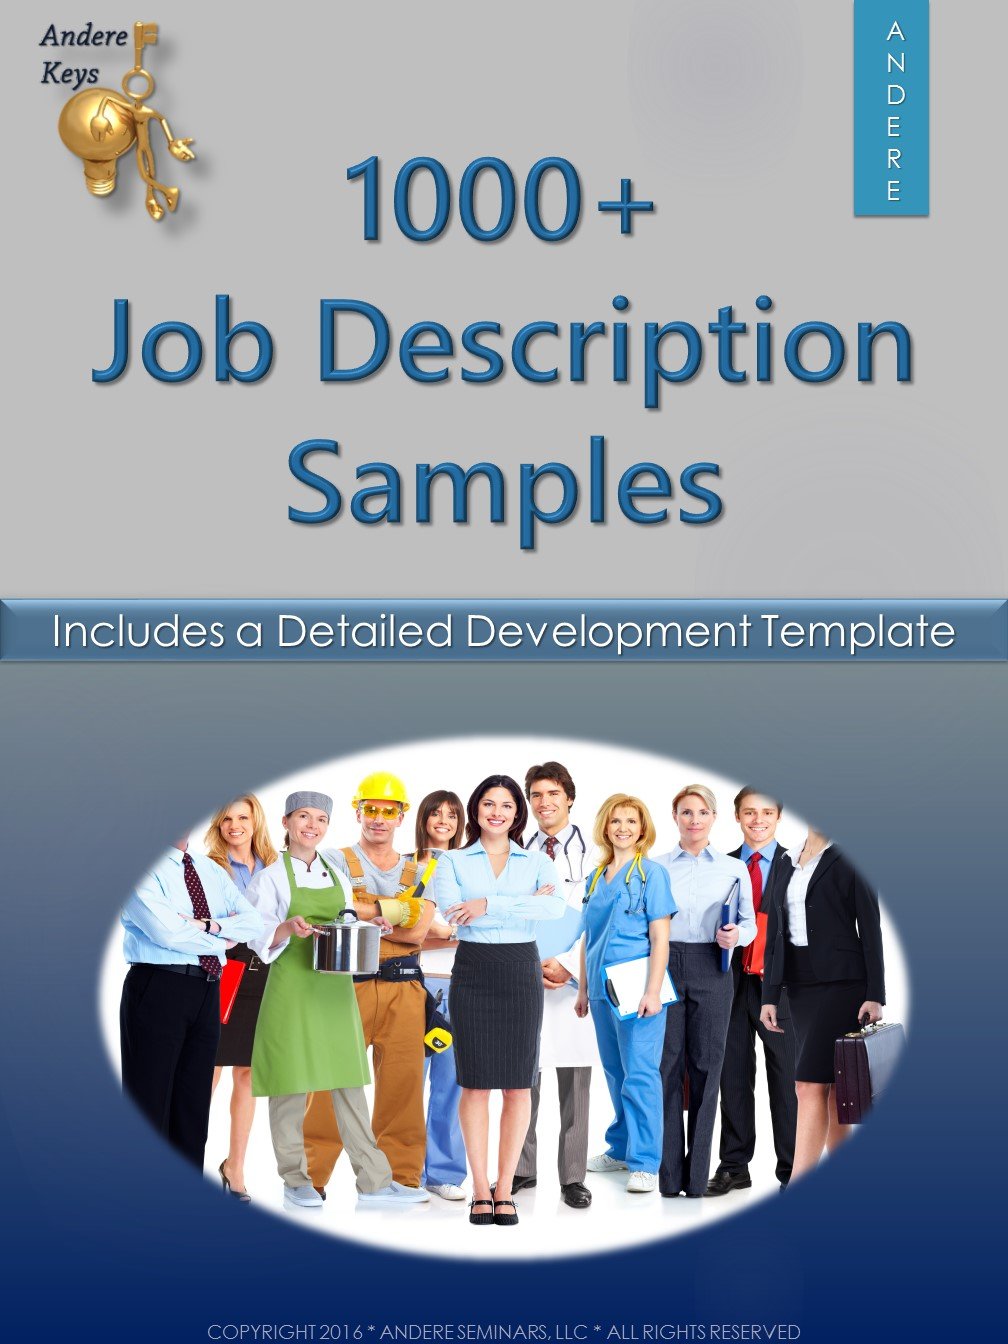 1000+ Job Description Samples with Guide